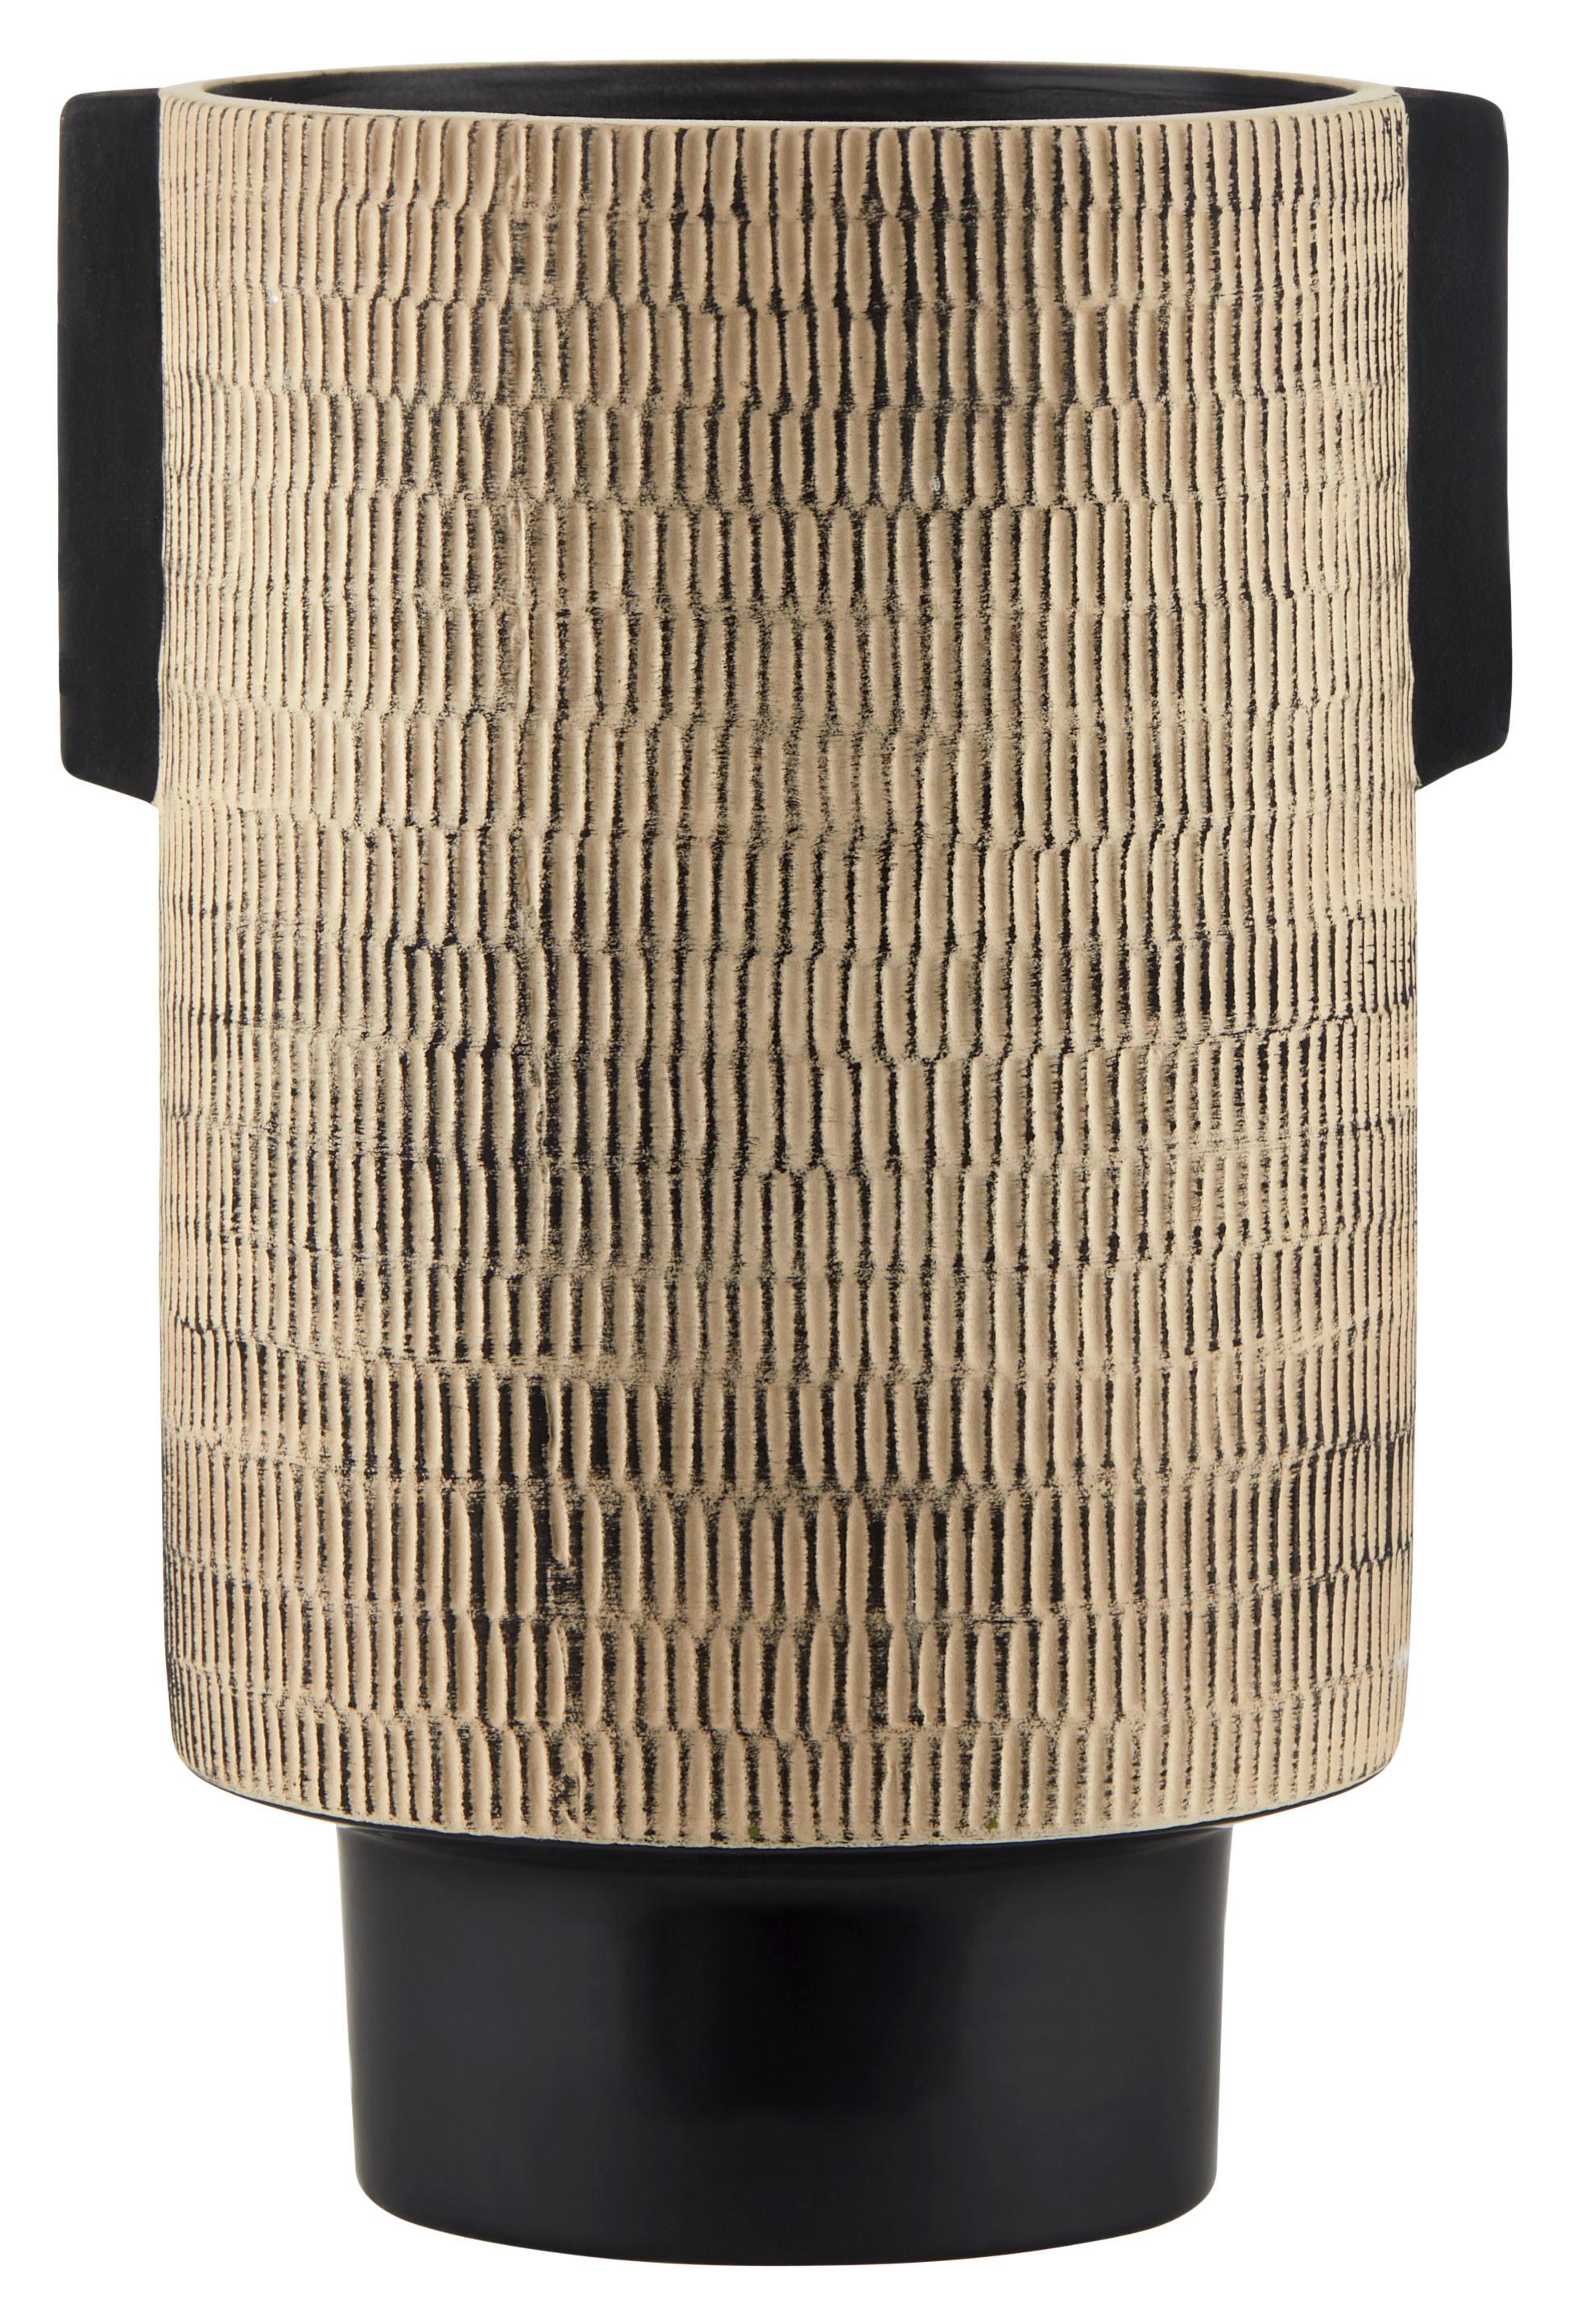 Vaza Akari -Paz- - črna/peščene barve, Konvencionalno, keramika (19,3/16,4/28cm) - Modern Living